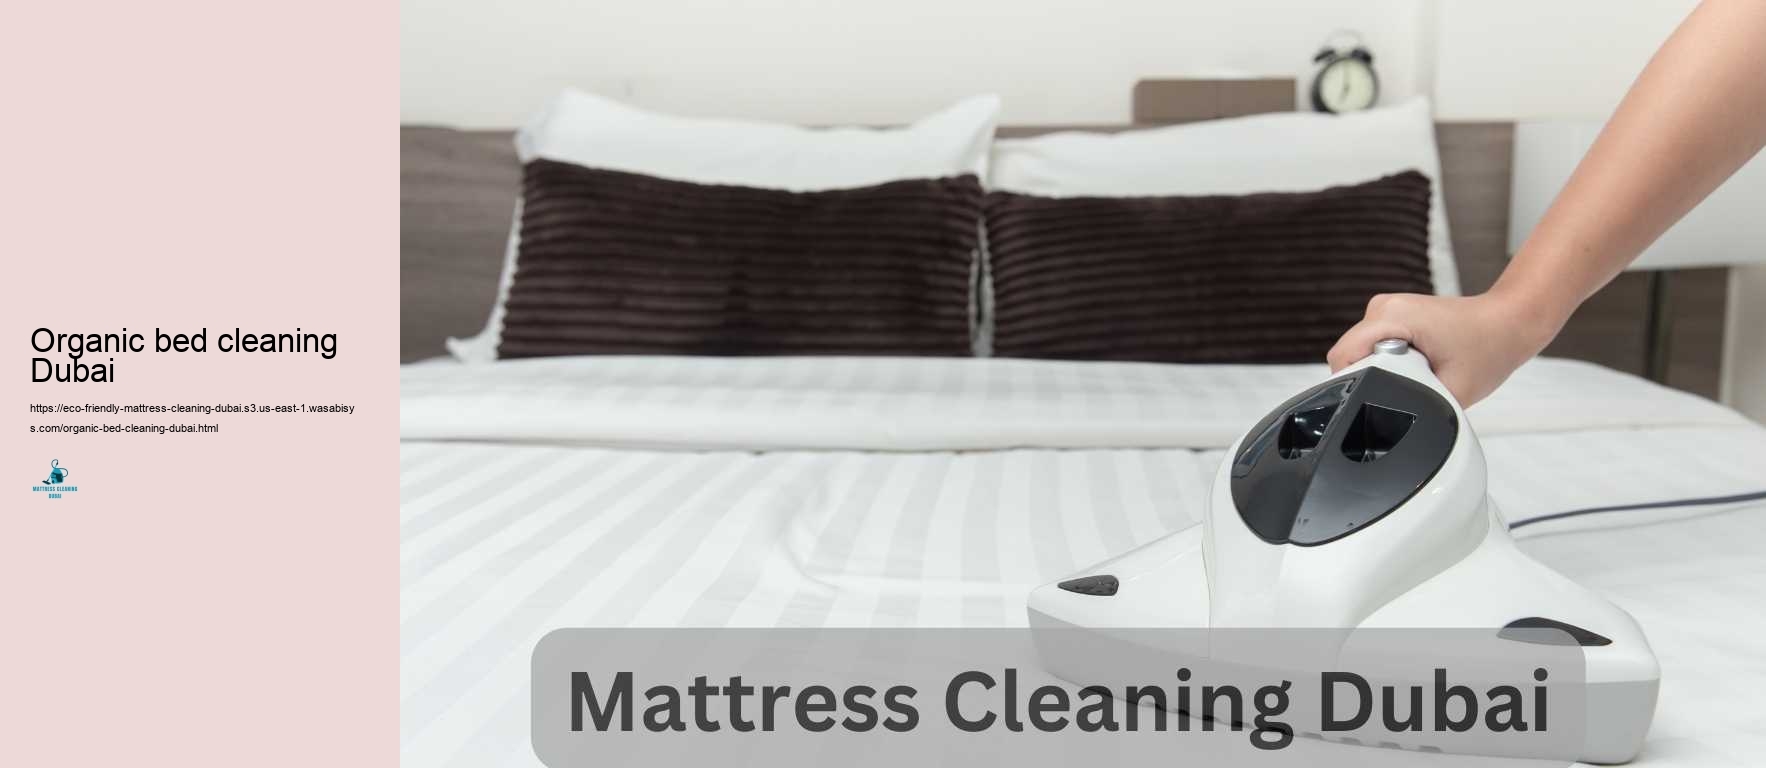 Organic bed cleaning Dubai